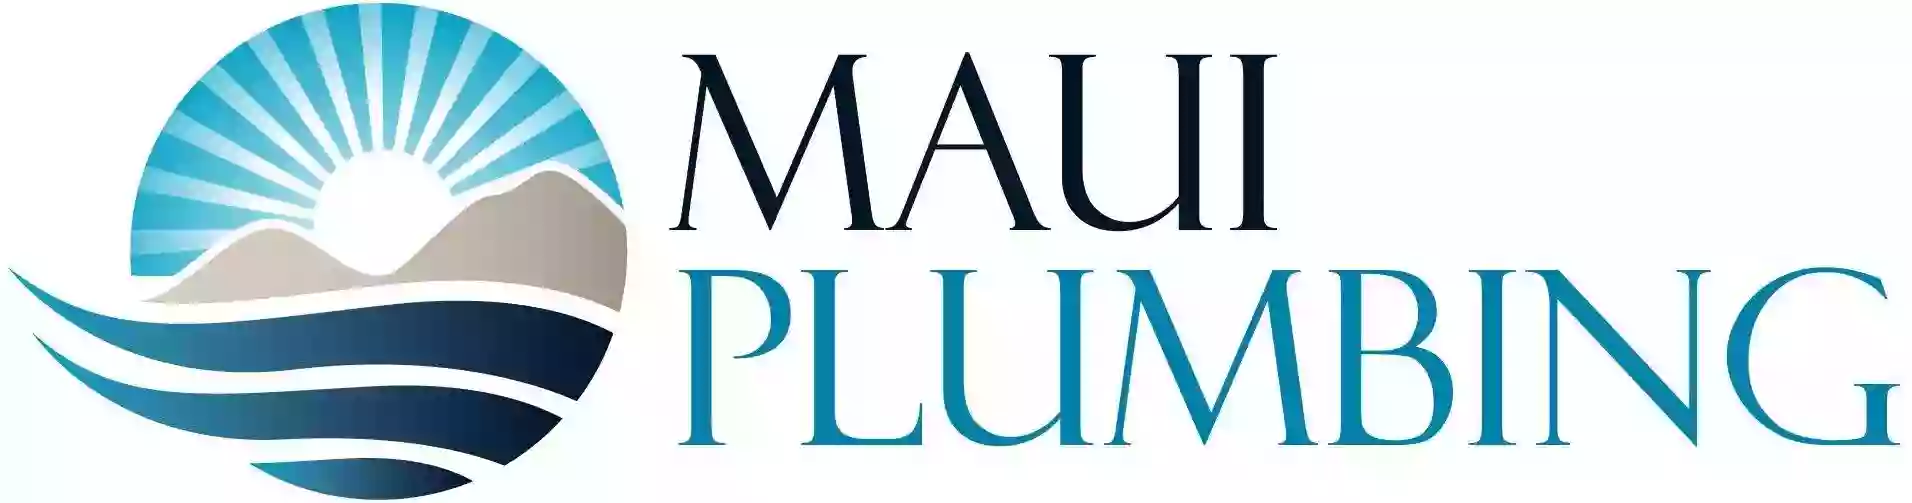 Maui Plumbing Inc.